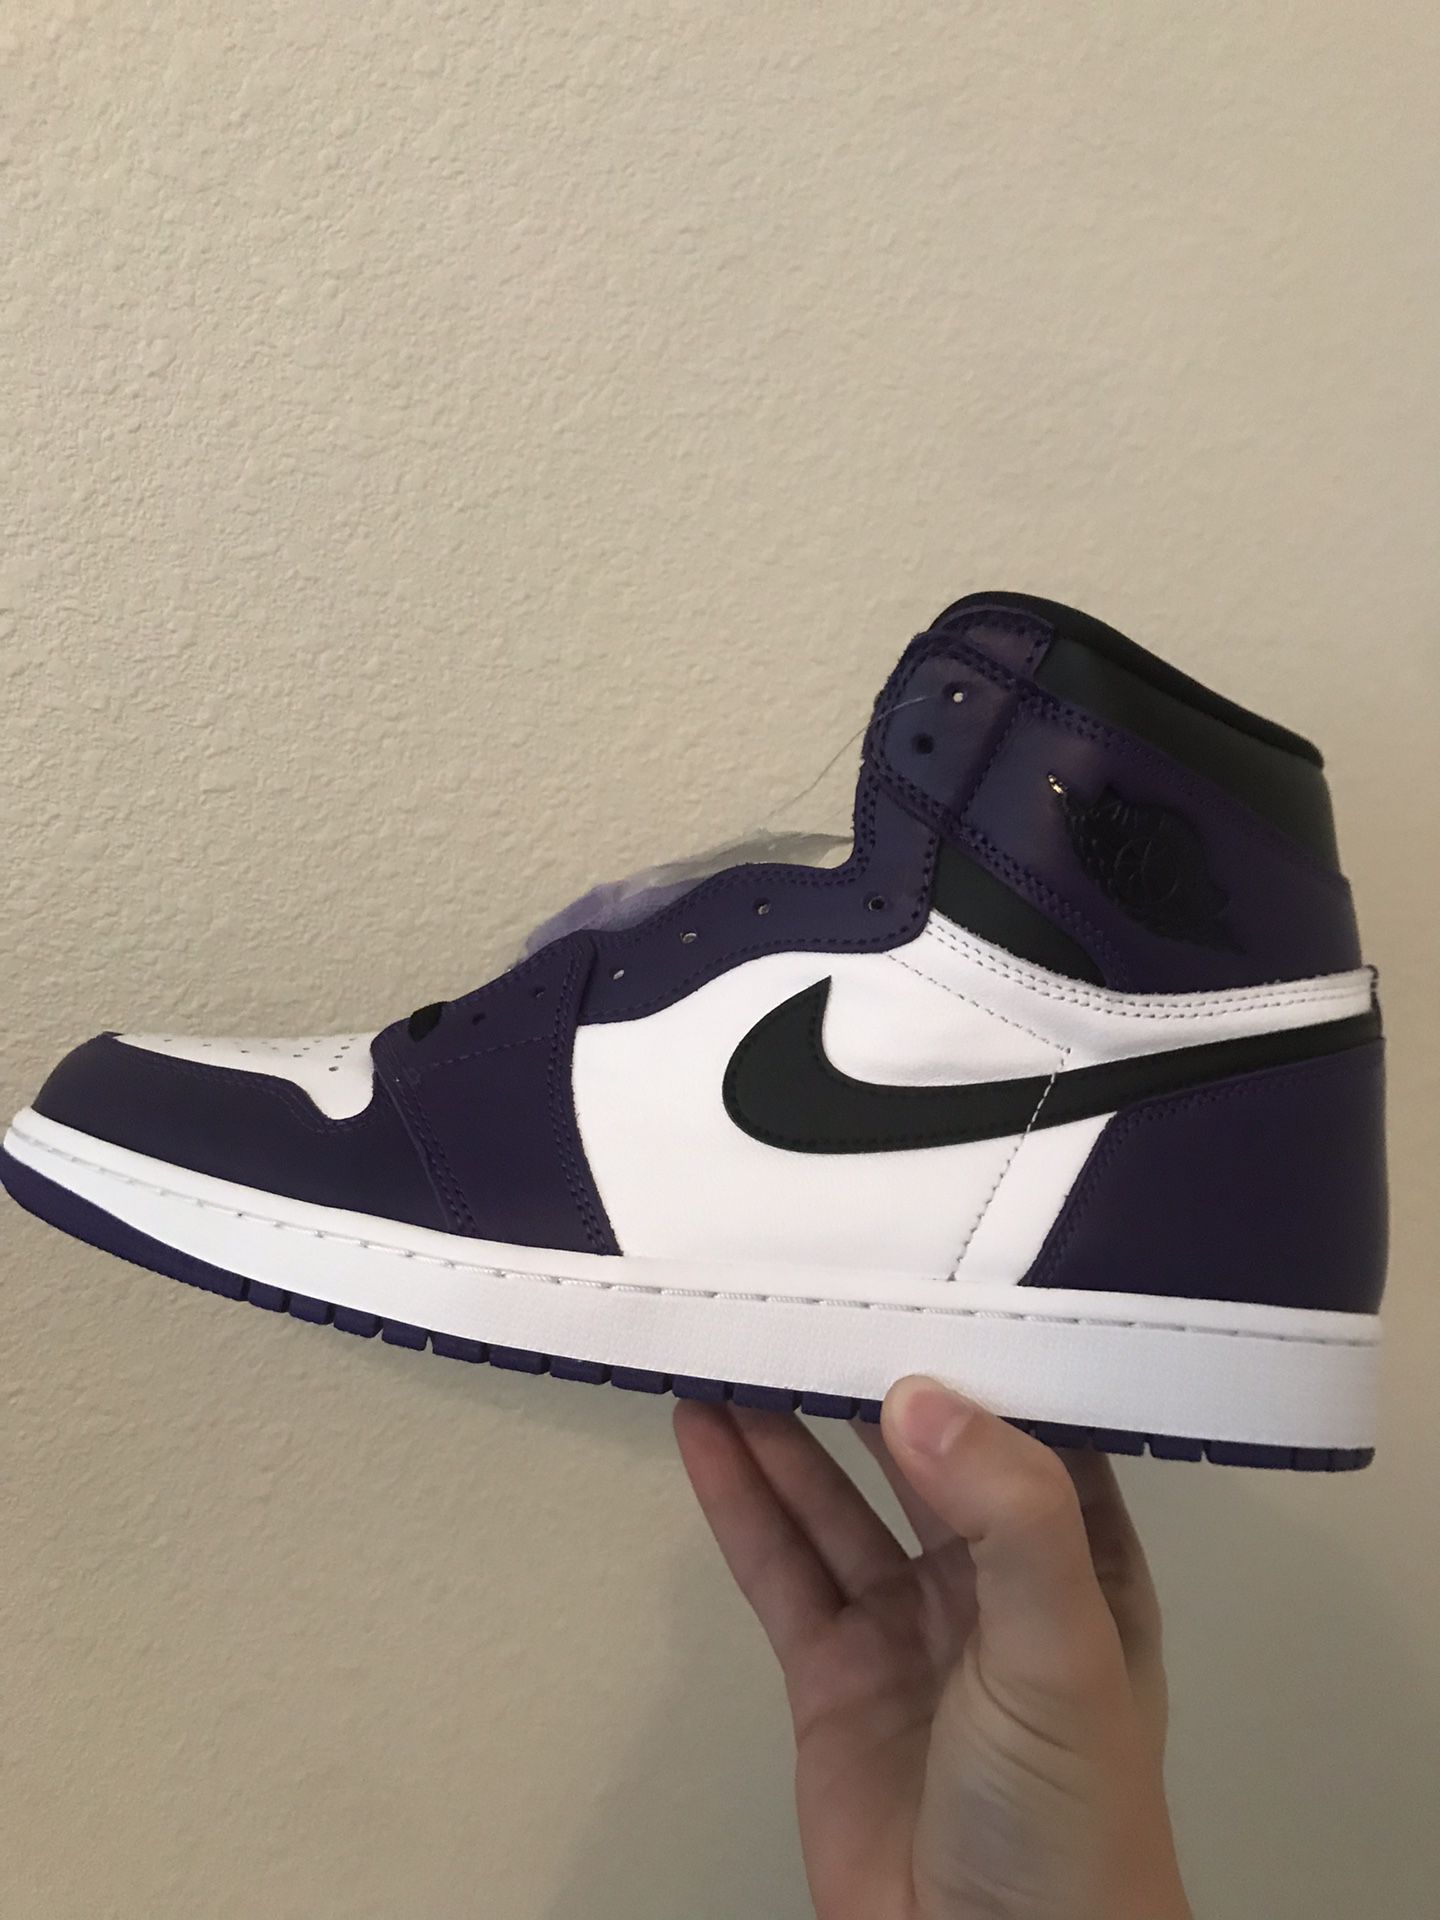 Jordan 1 Court Purple - Size 12